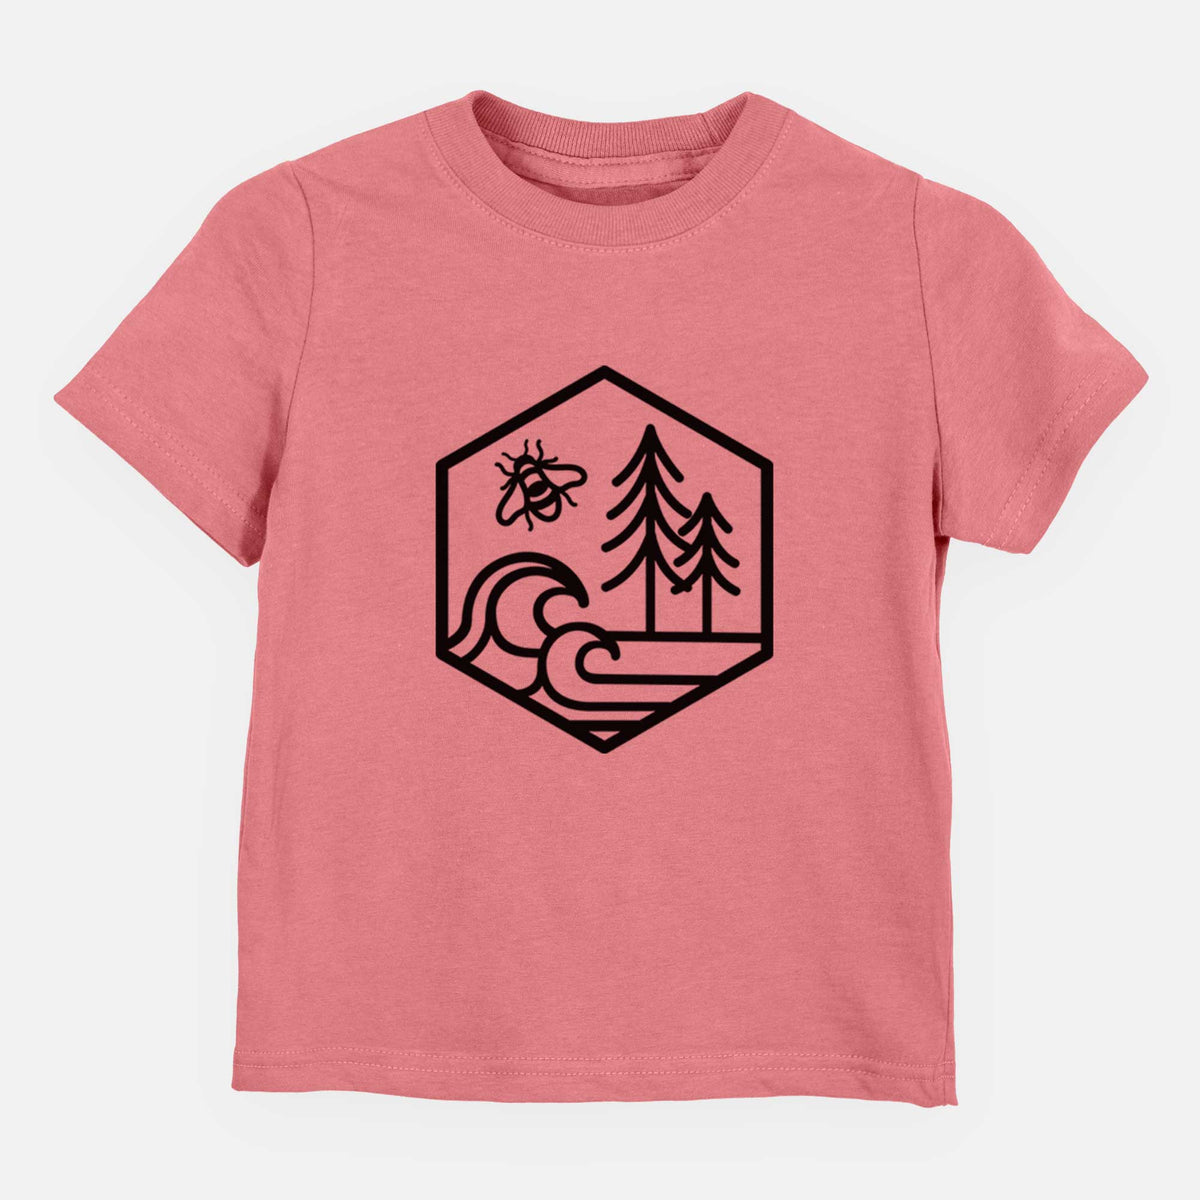 Harmonious Hexagon - Bees, Seas, Trees - Kids Shirt